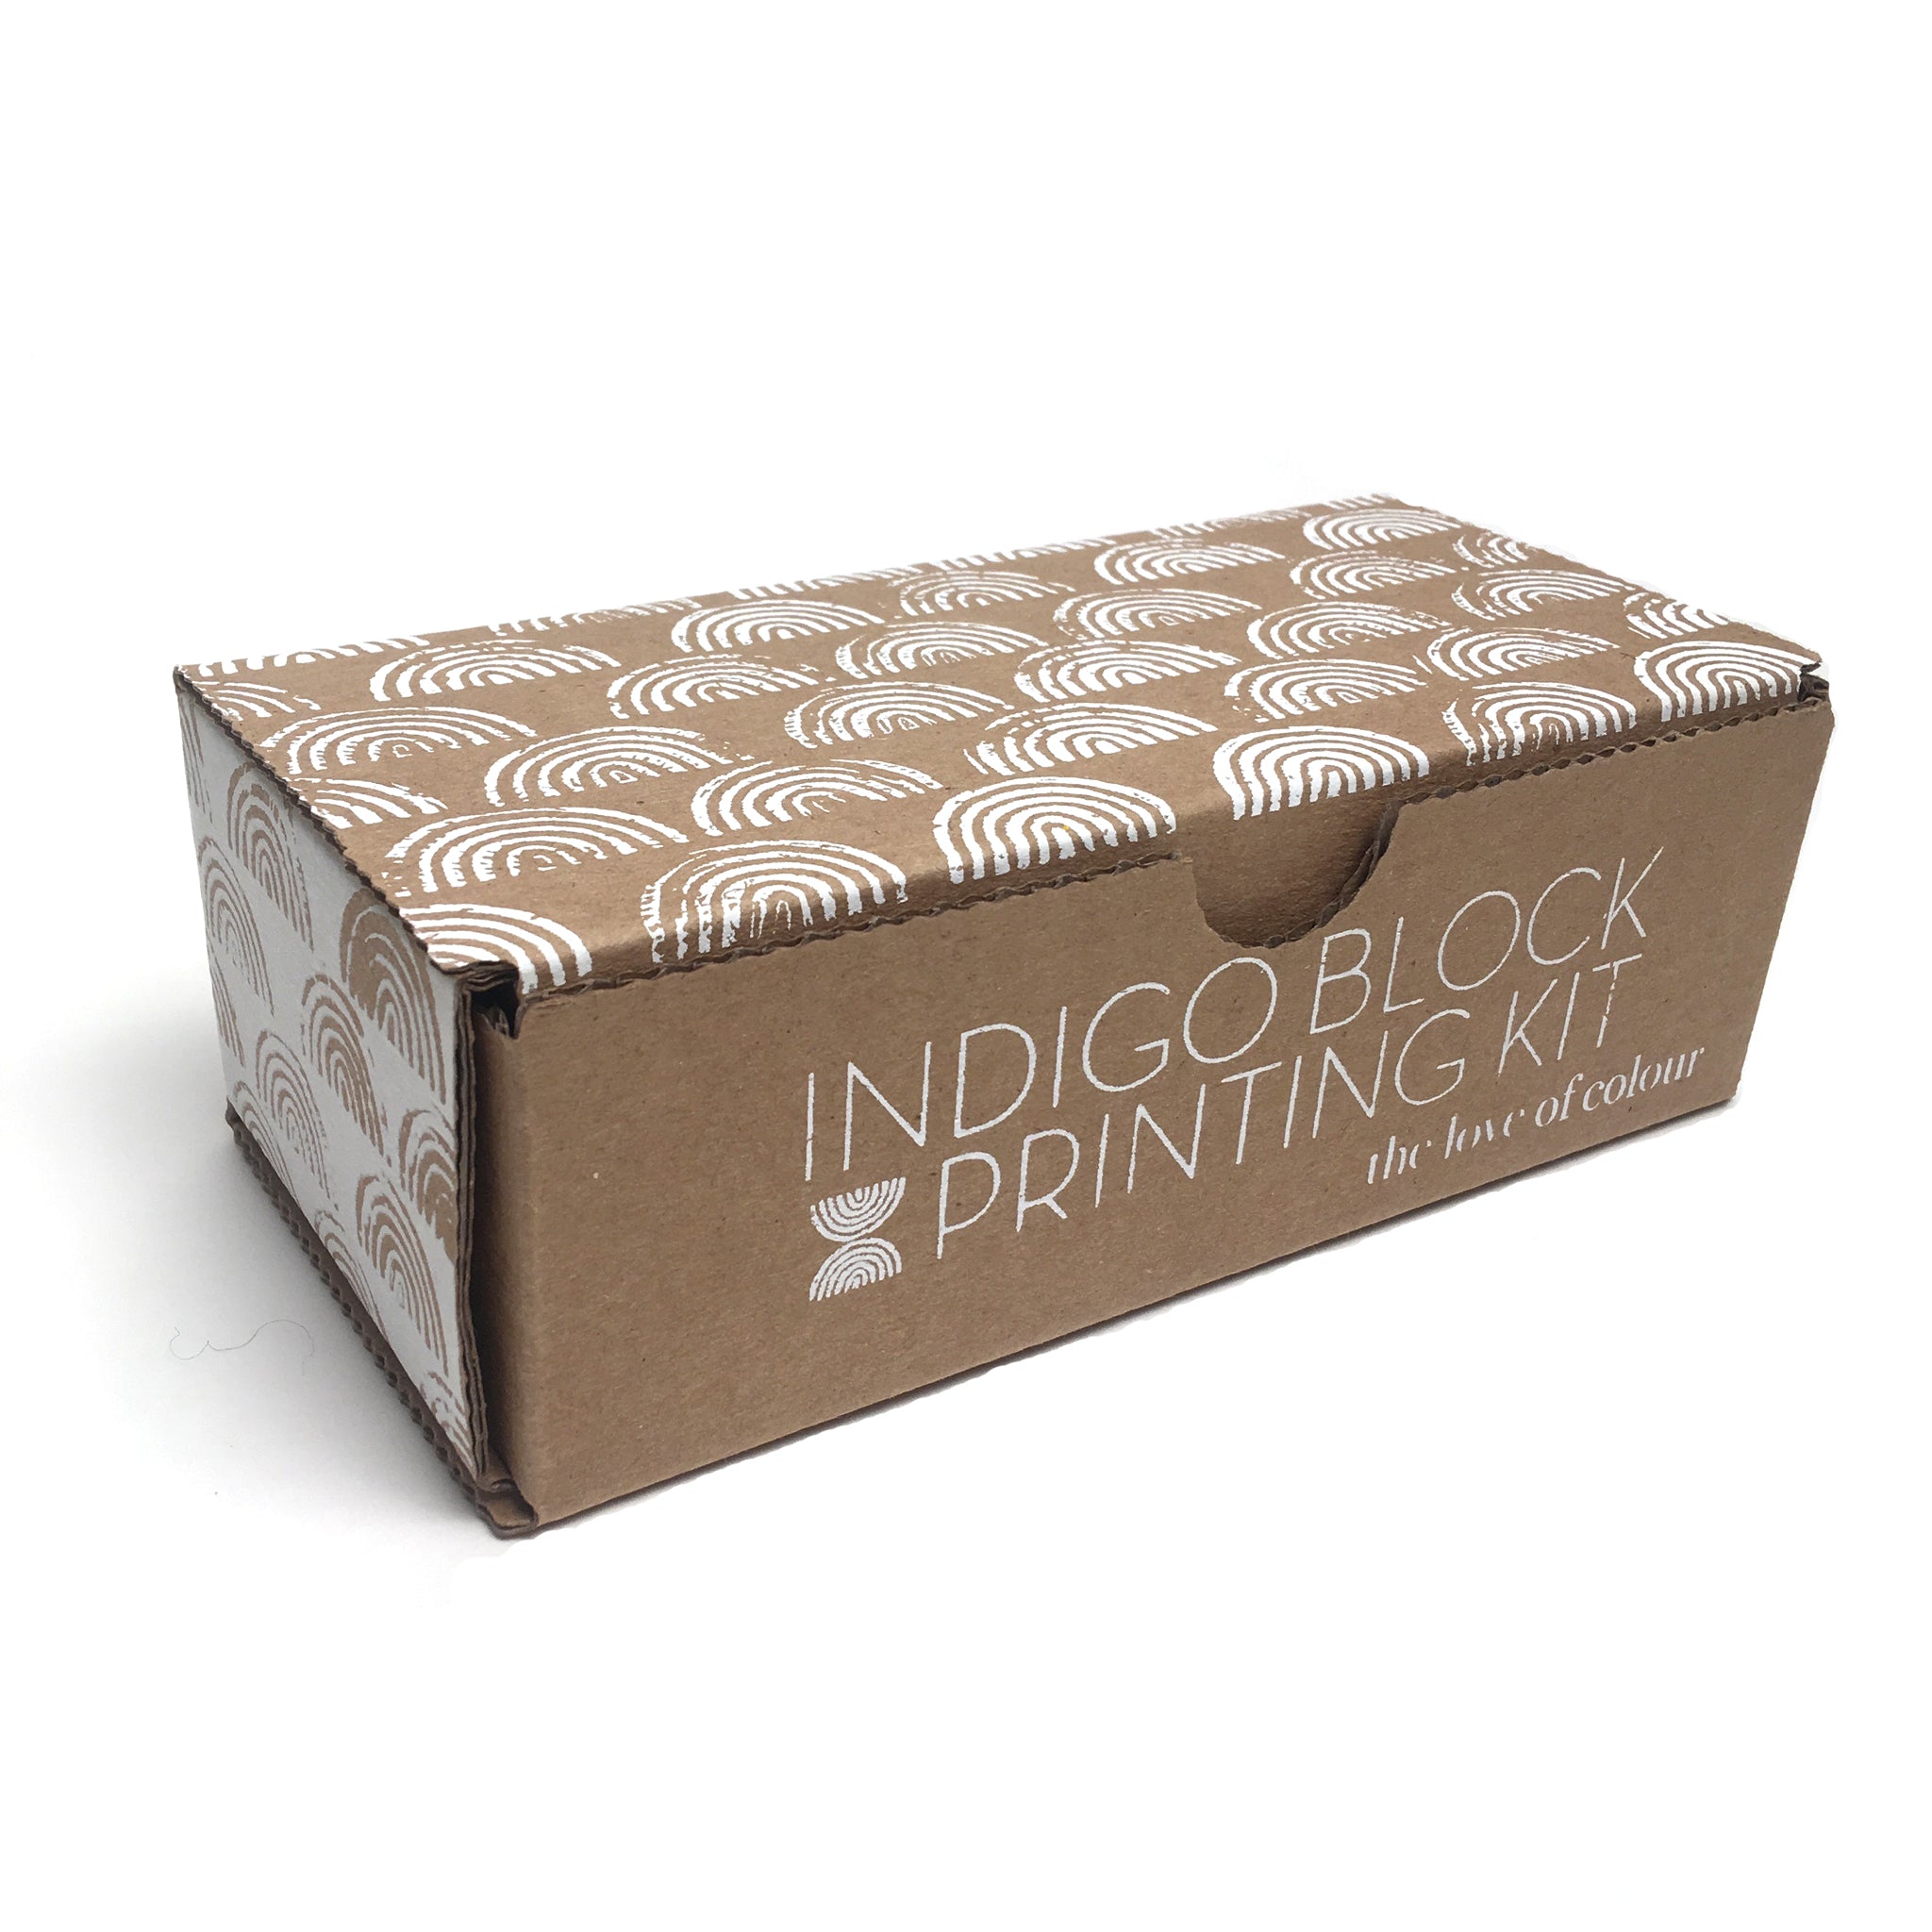 Indigo block printing kit